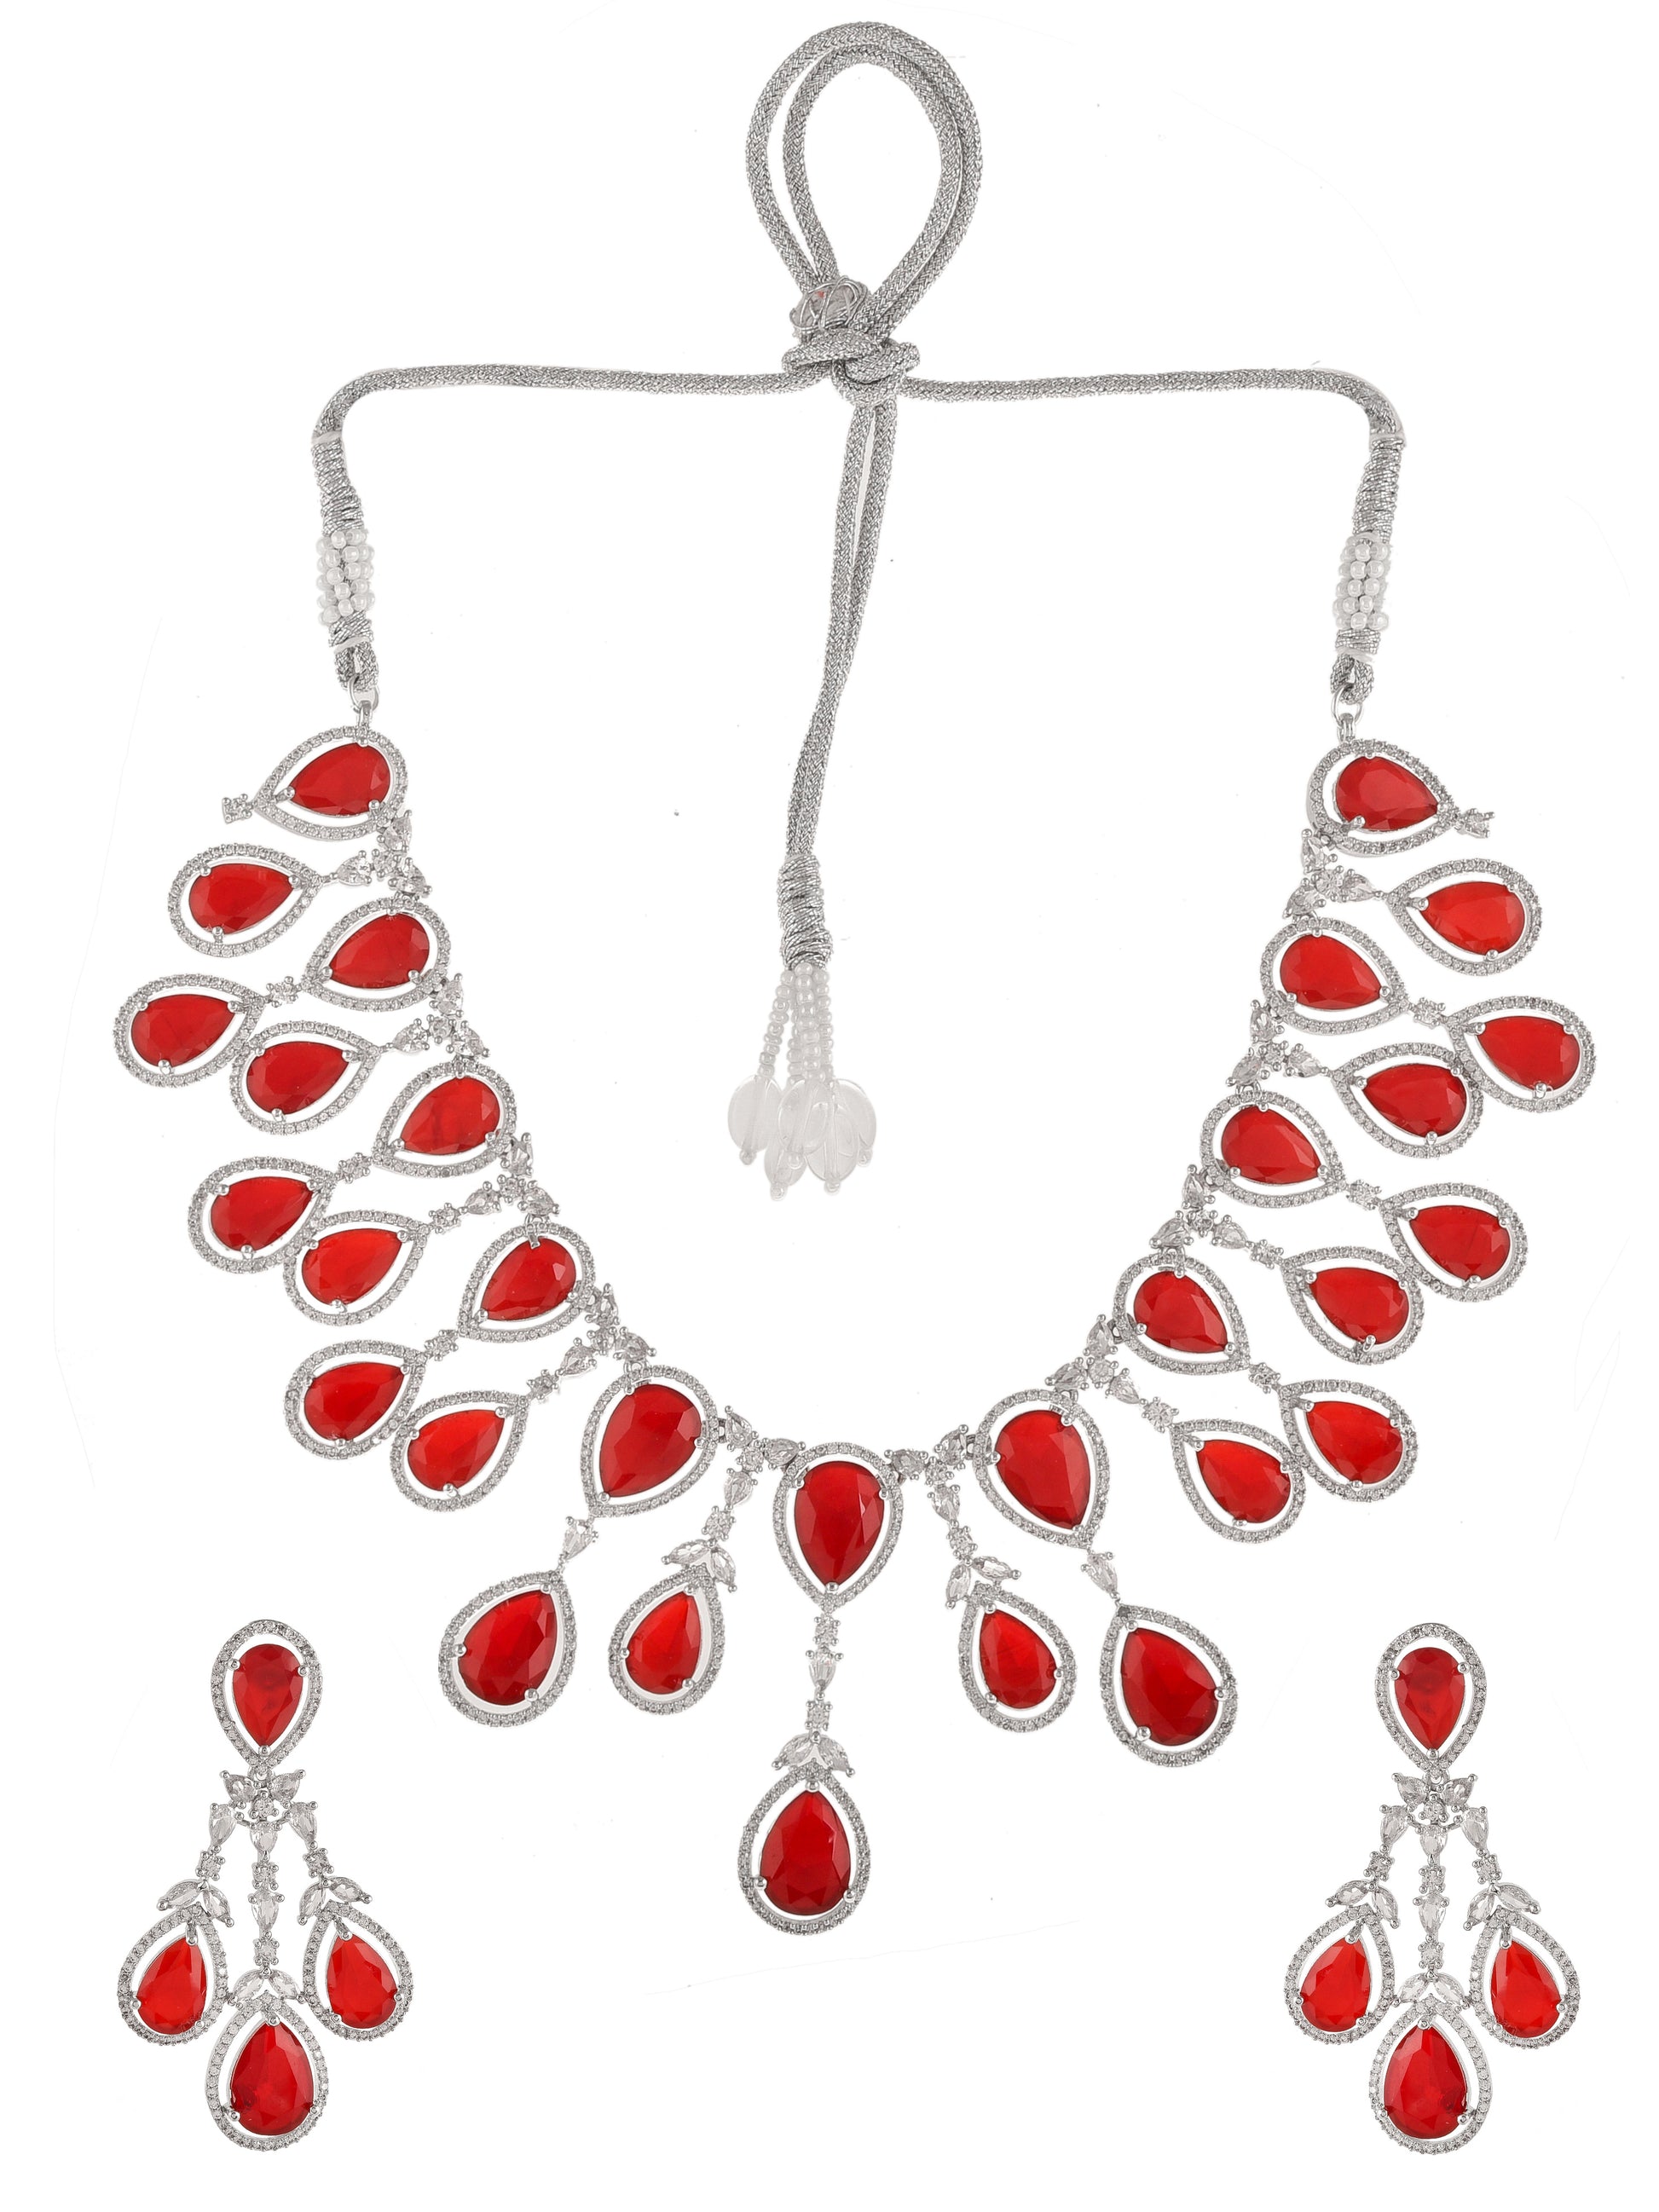 Faux Ruby American Diamond bridal jewellery set